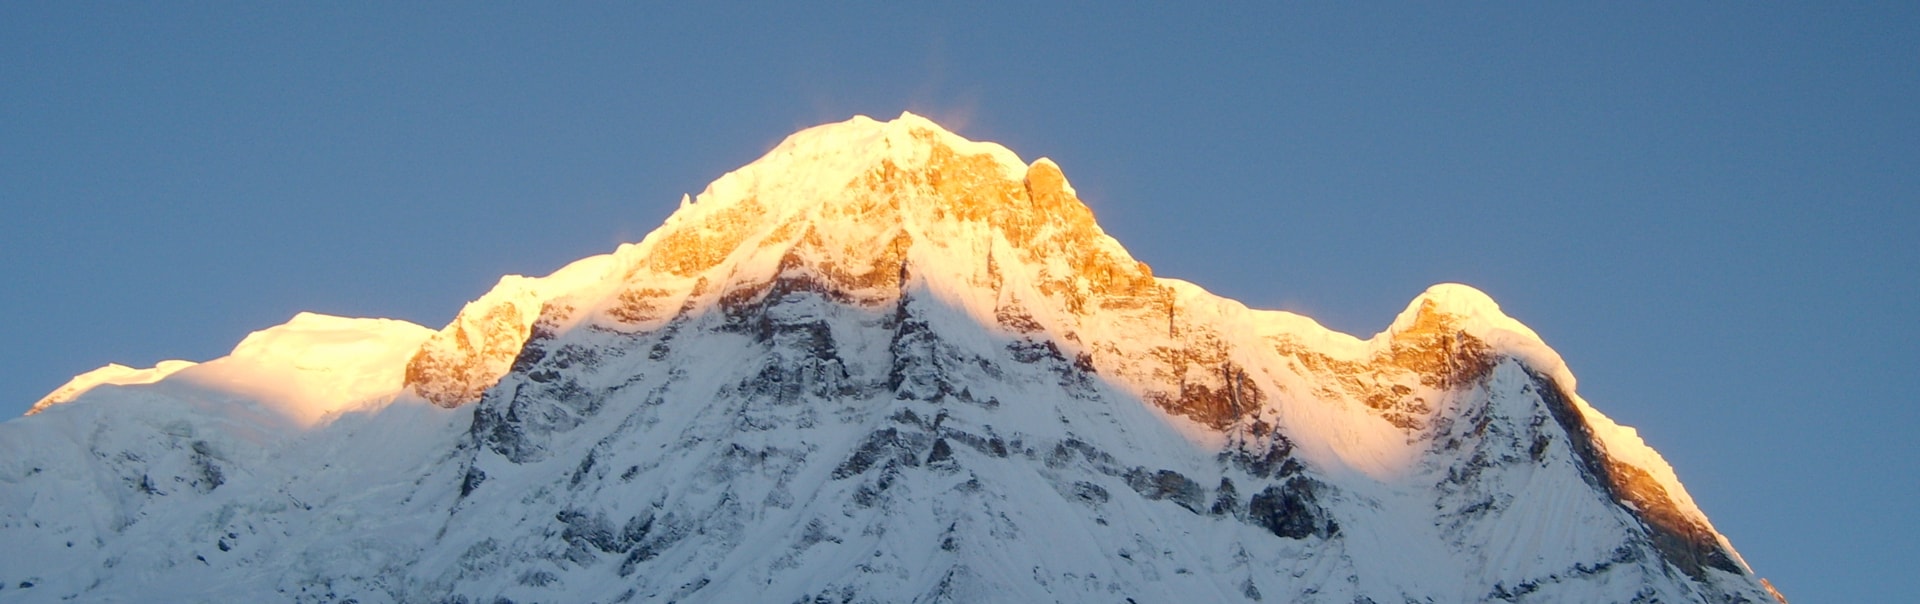 Himchuli Peak Climbing (6441m)